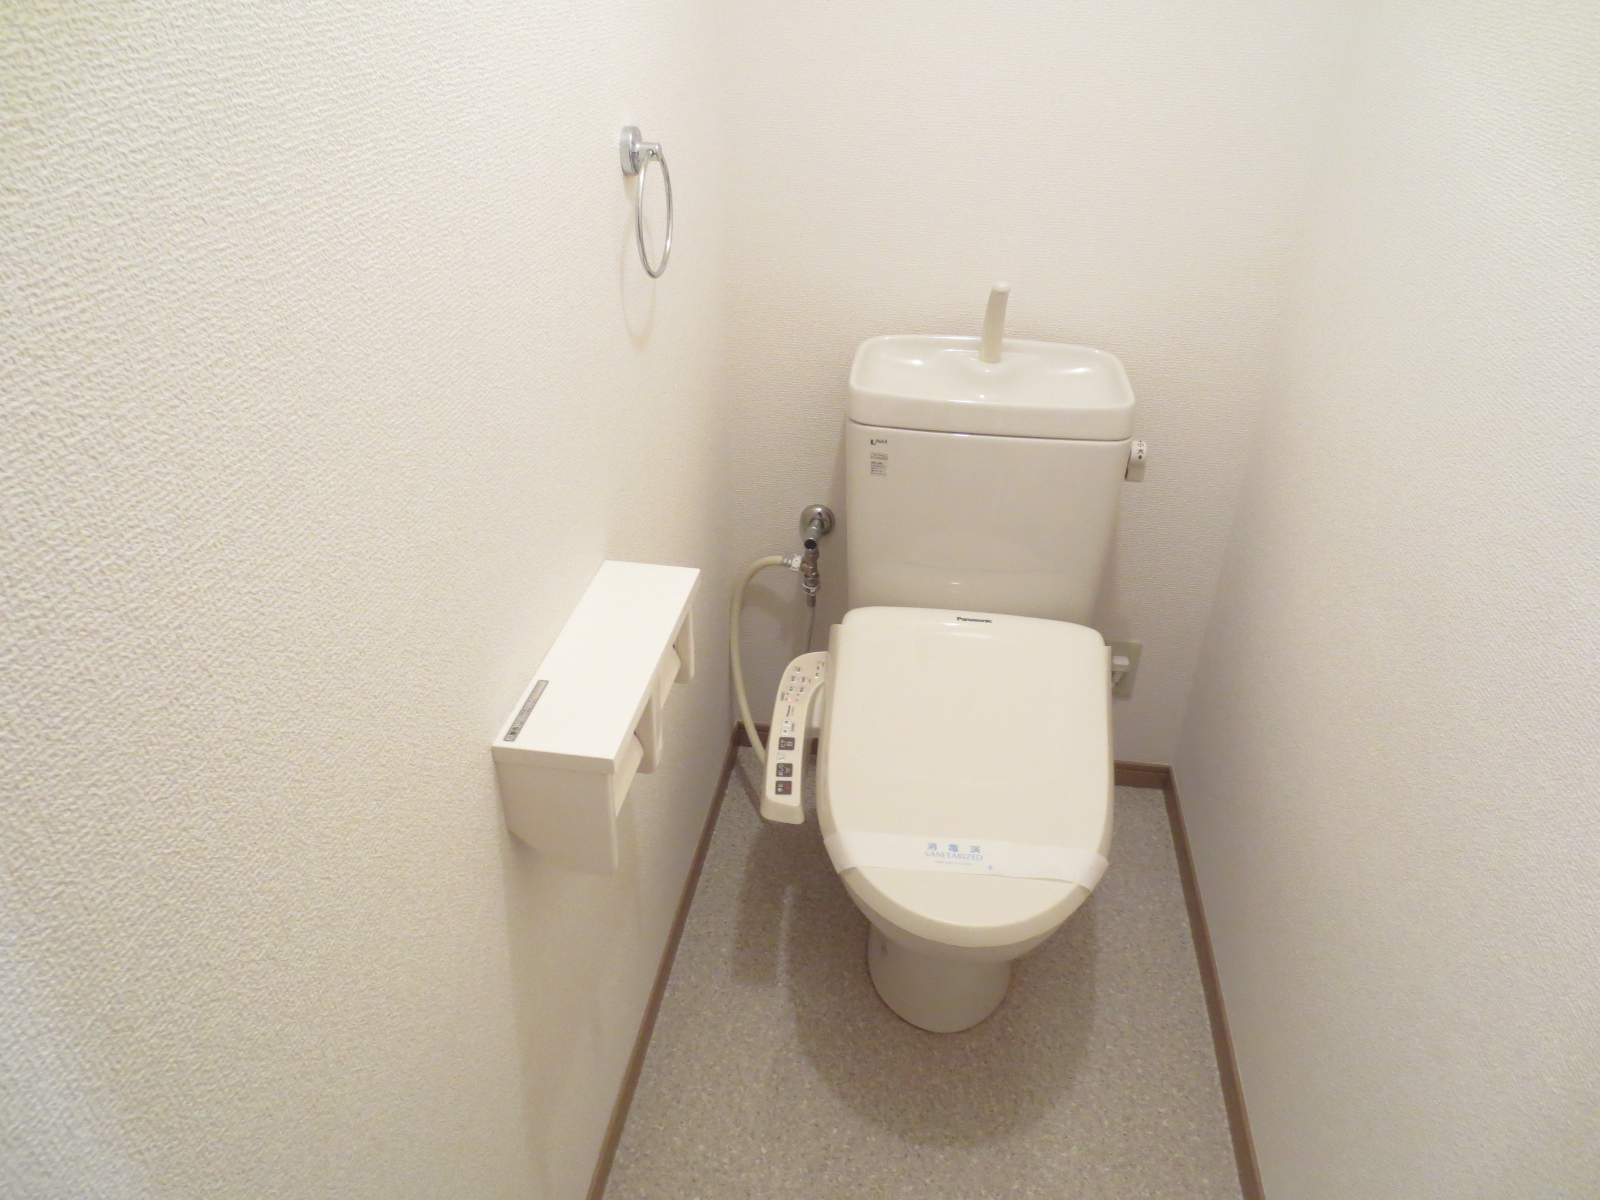 Toilet. It is a warm water washing toilet seat!